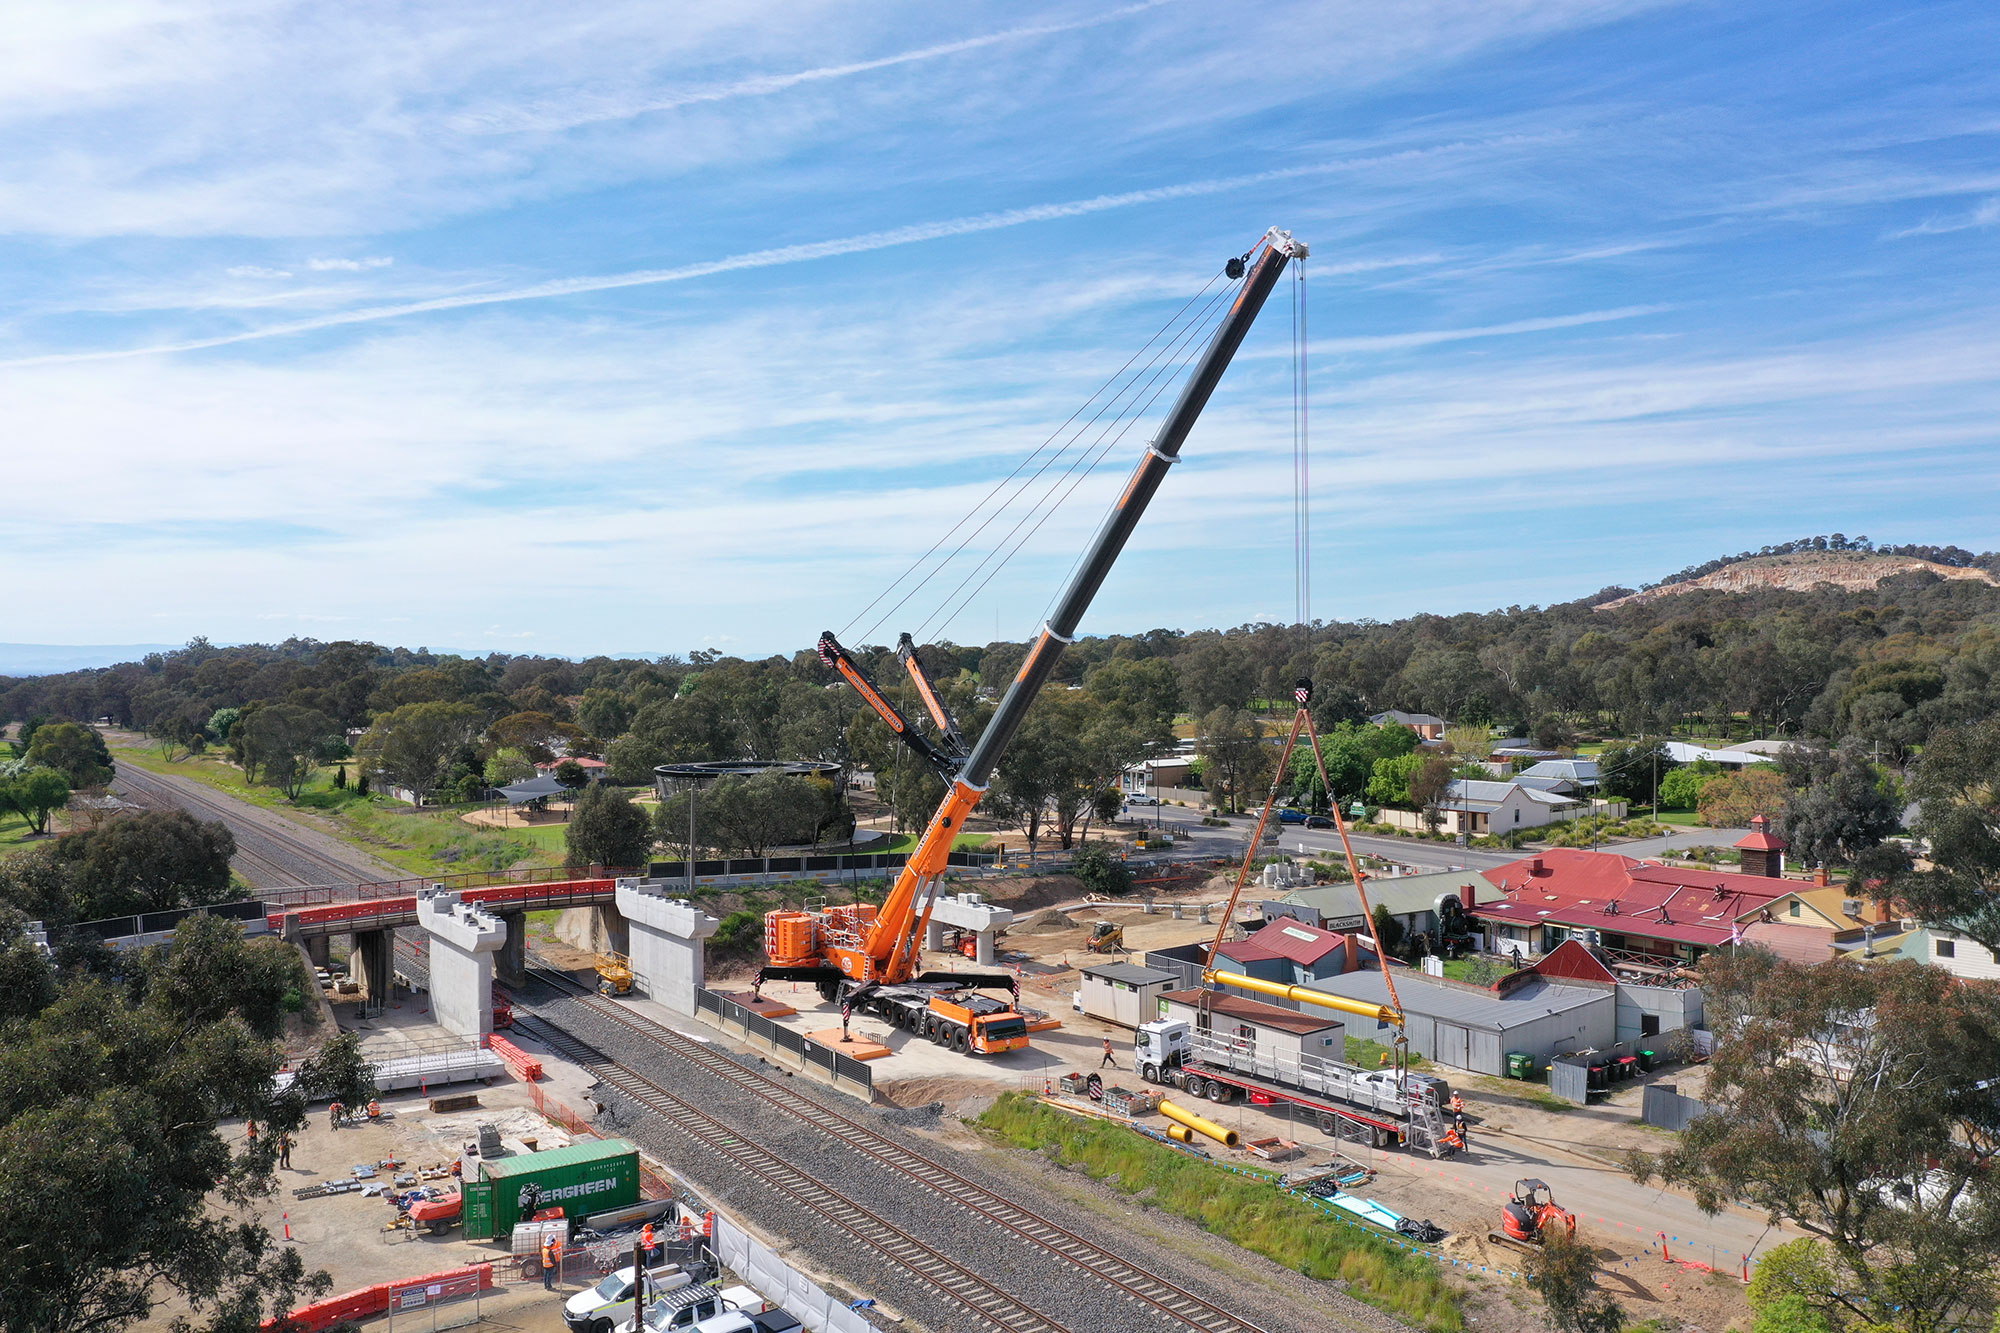 A crane unloads beams from the trucks